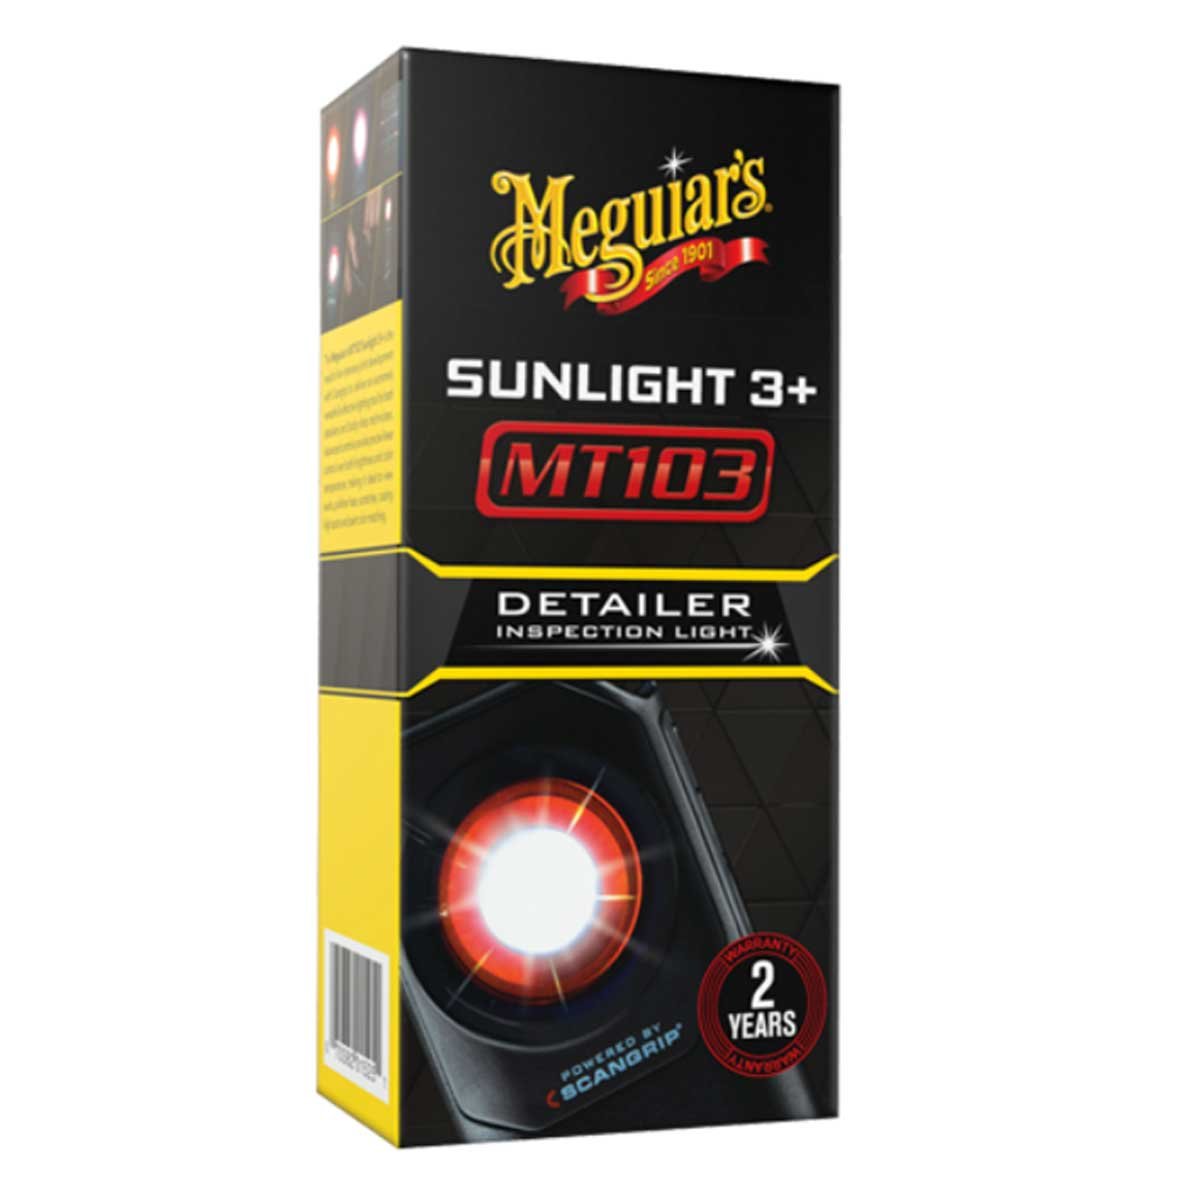 MT103 Sunlight 3+ Inspection Light